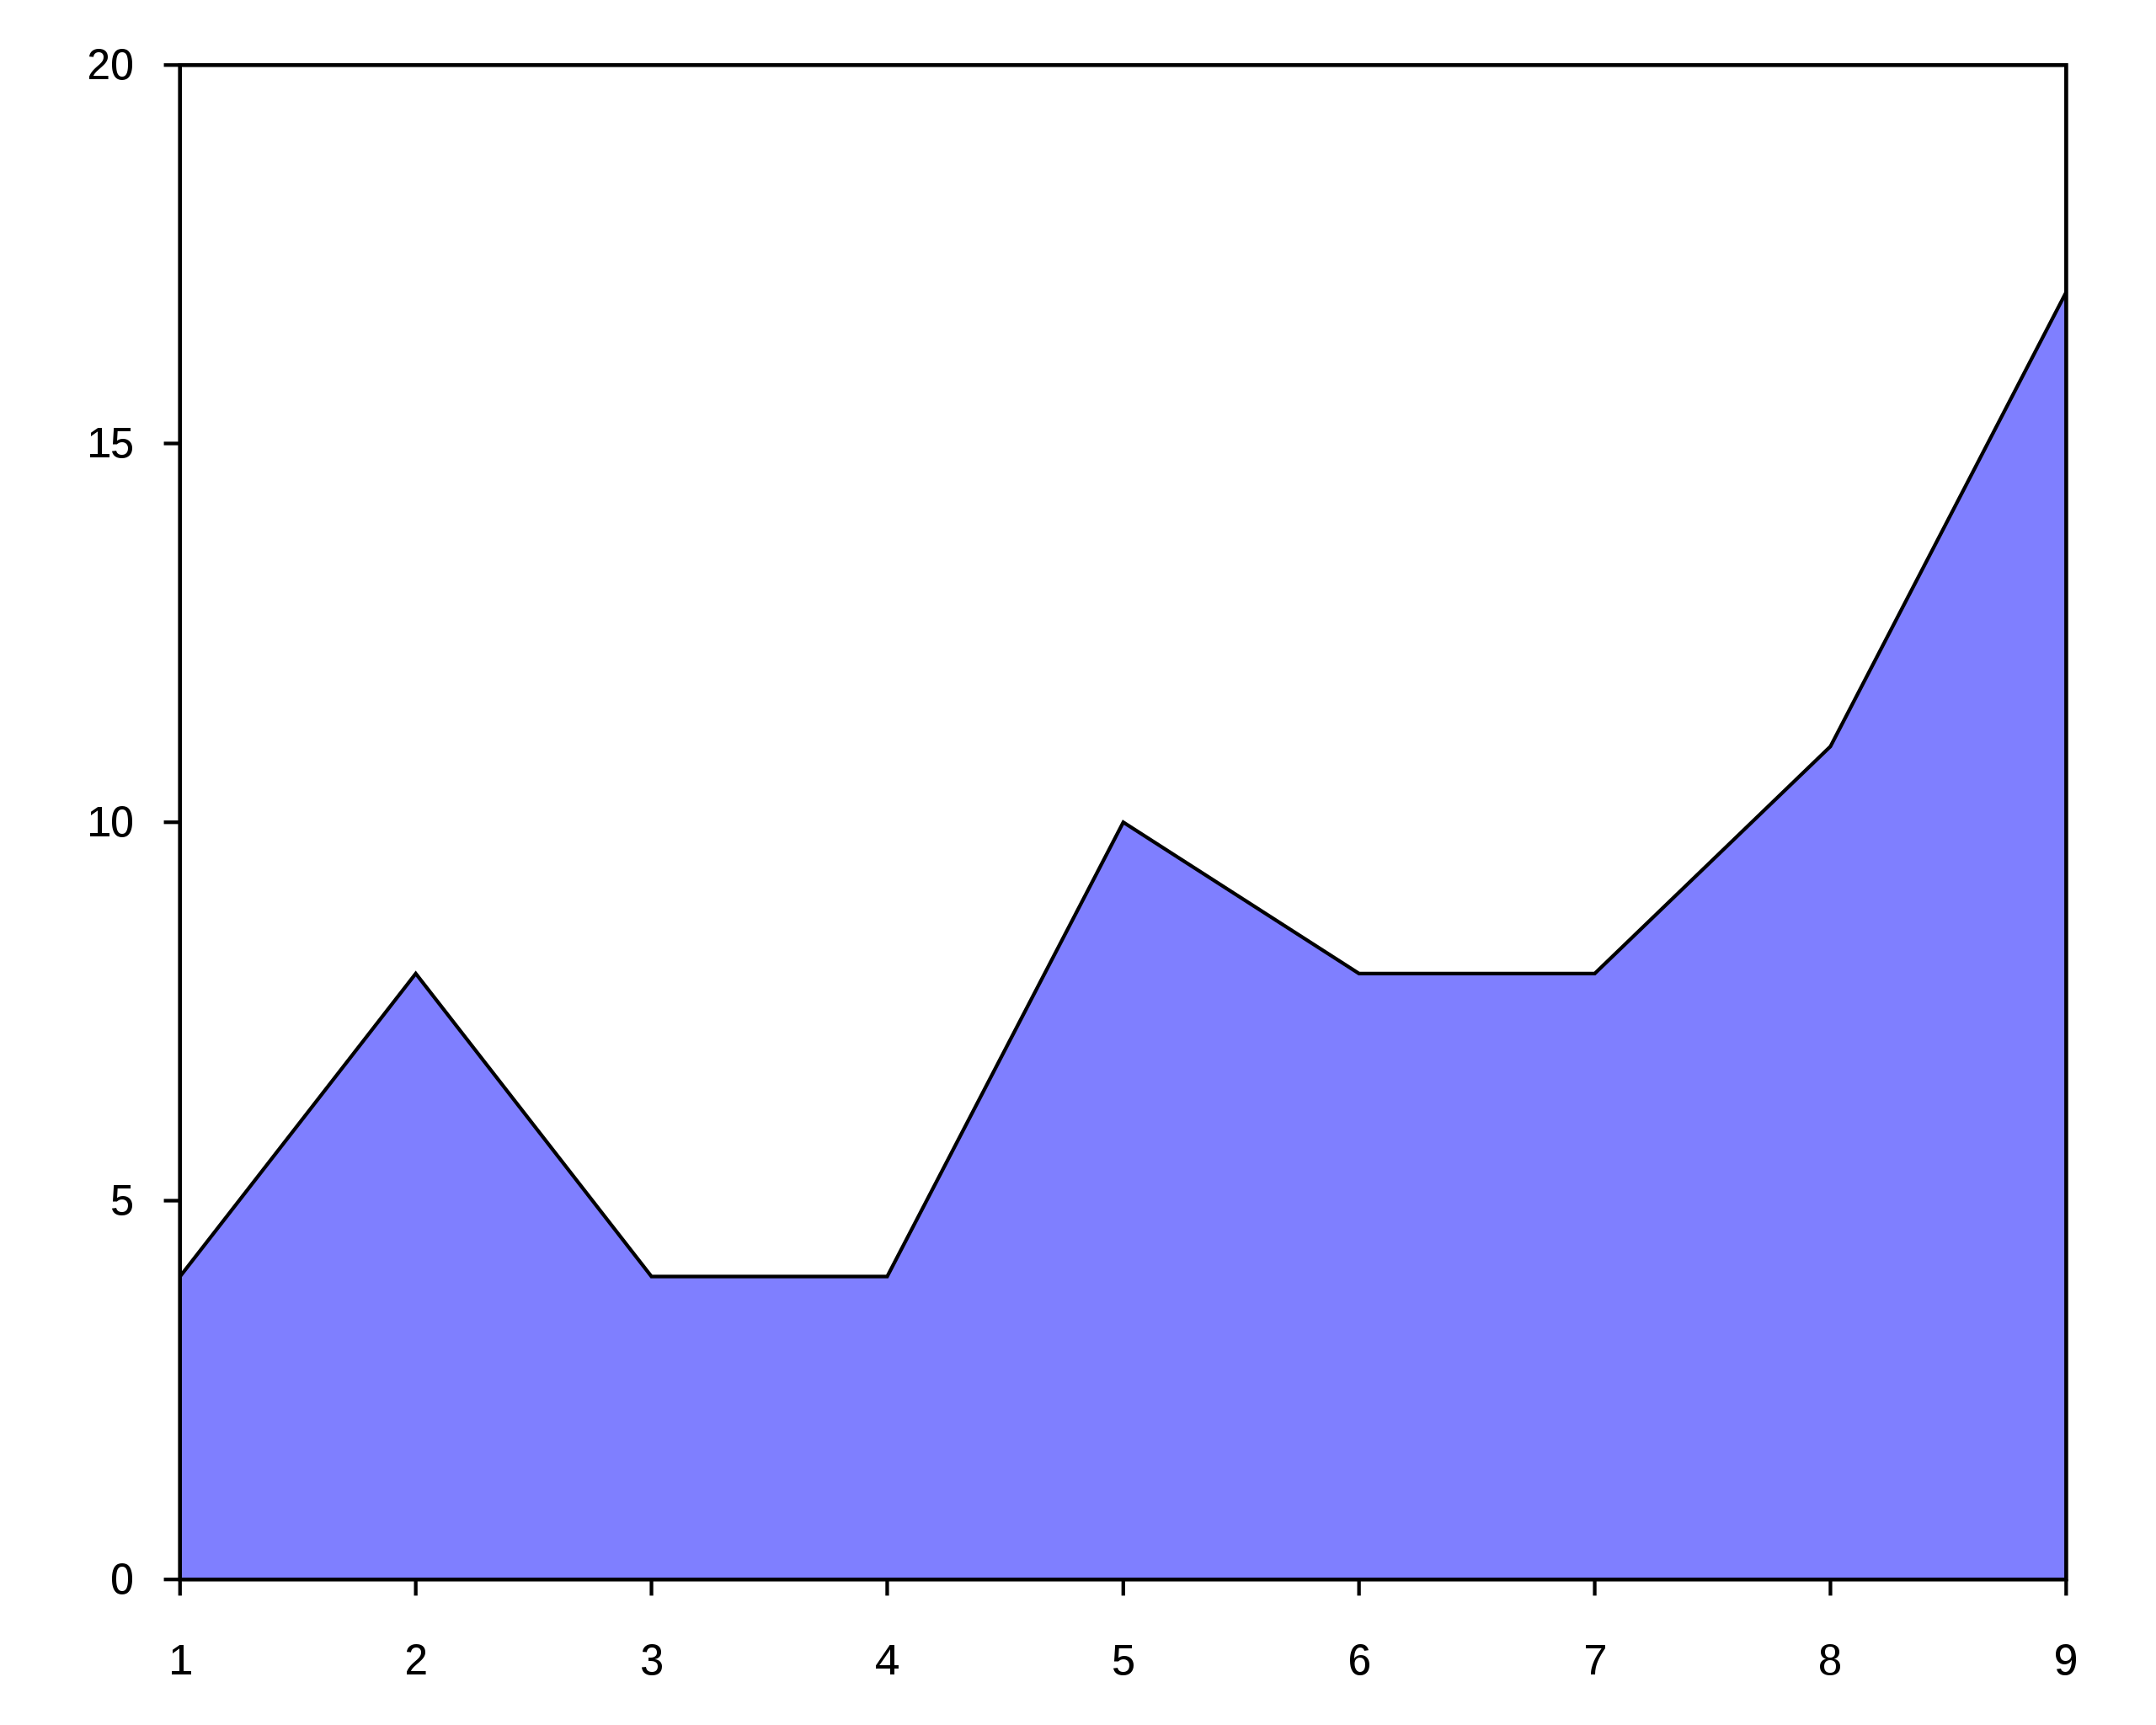 File:Simbolos-graficos.232.jpg - Wikimedia Commons